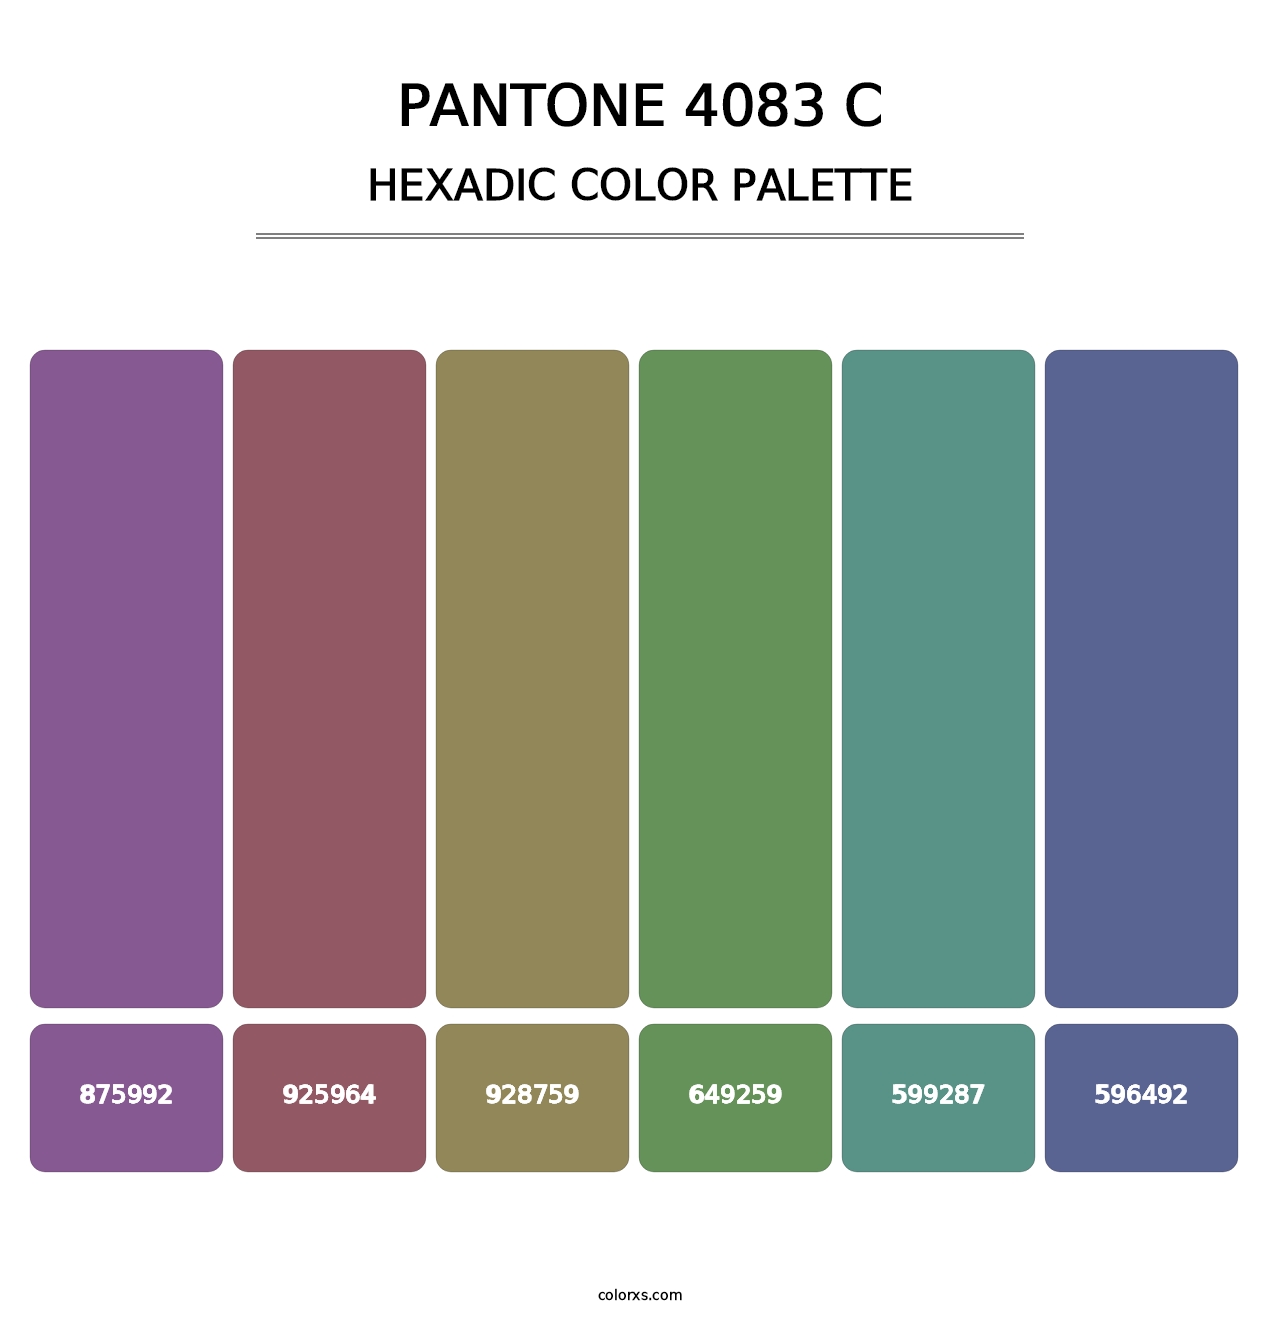 PANTONE 4083 C - Hexadic Color Palette